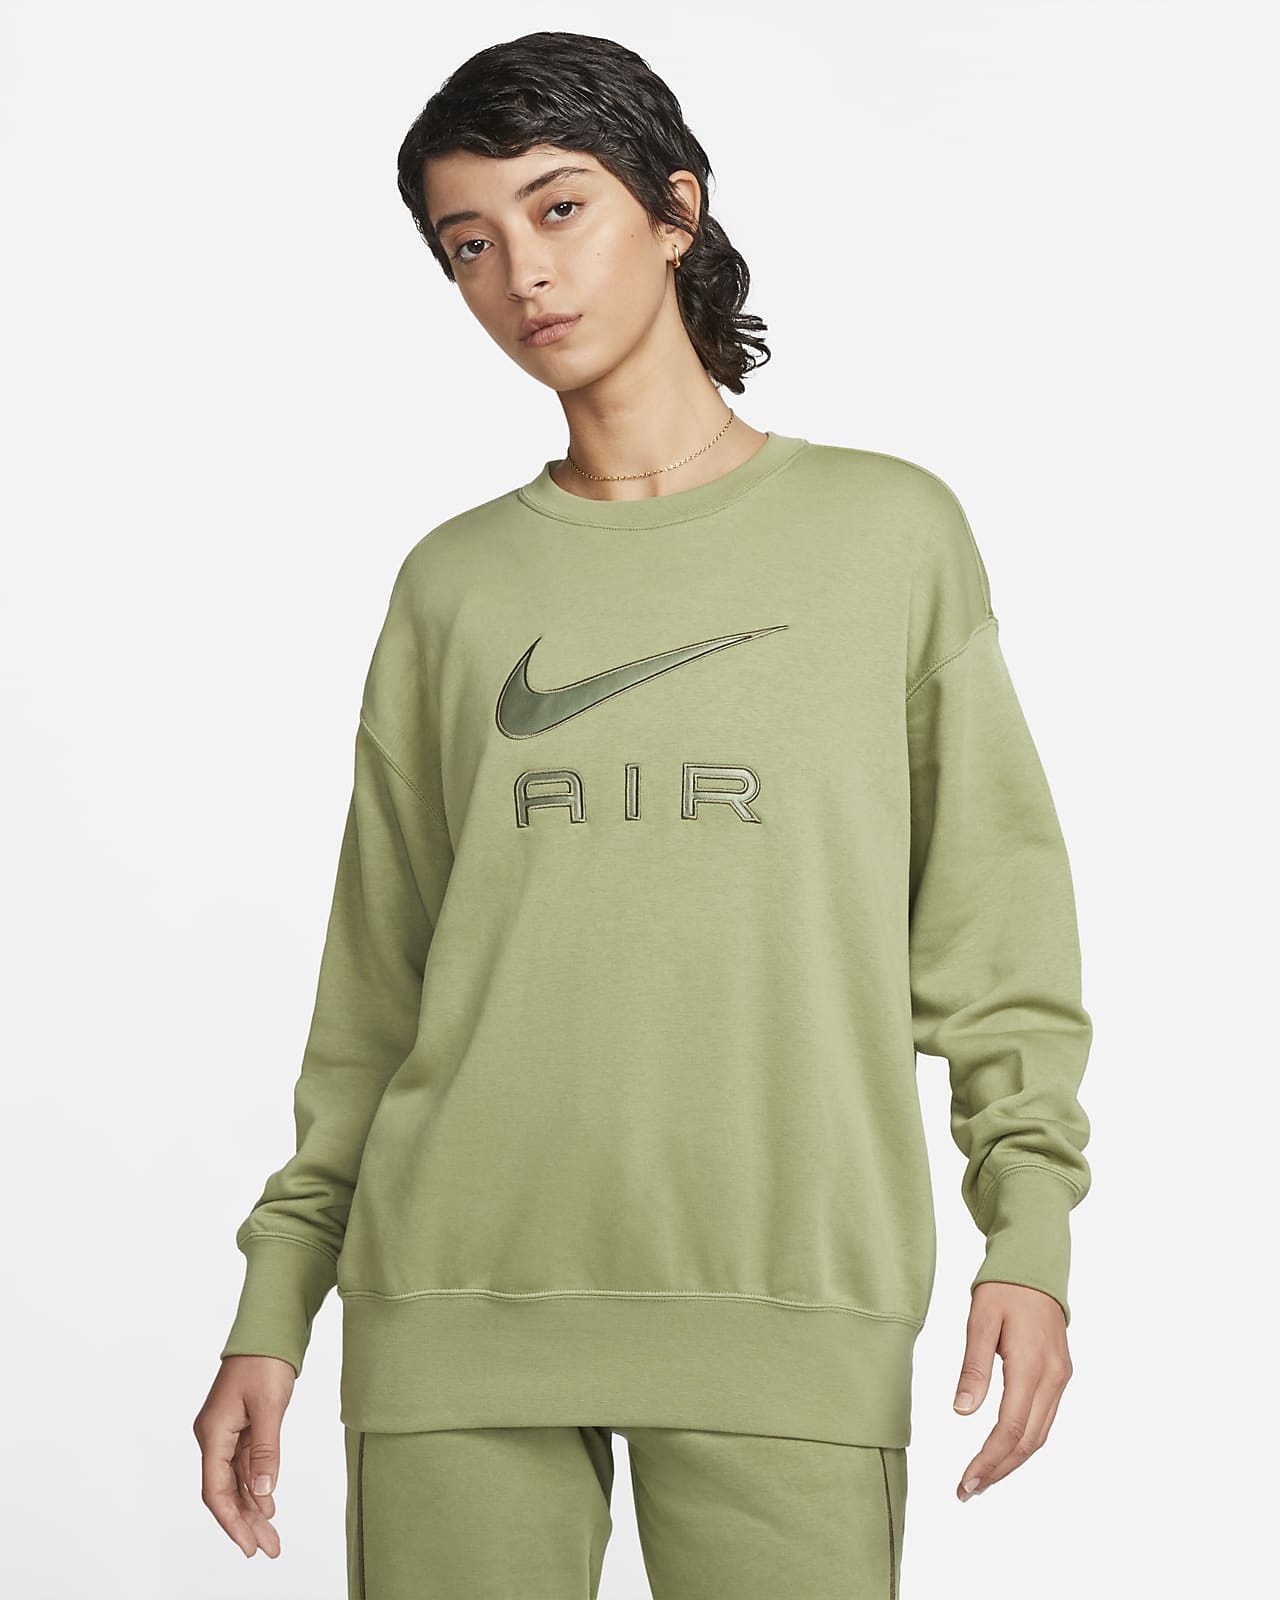 Air Women's Fleece Sweatshirt. Nike.com